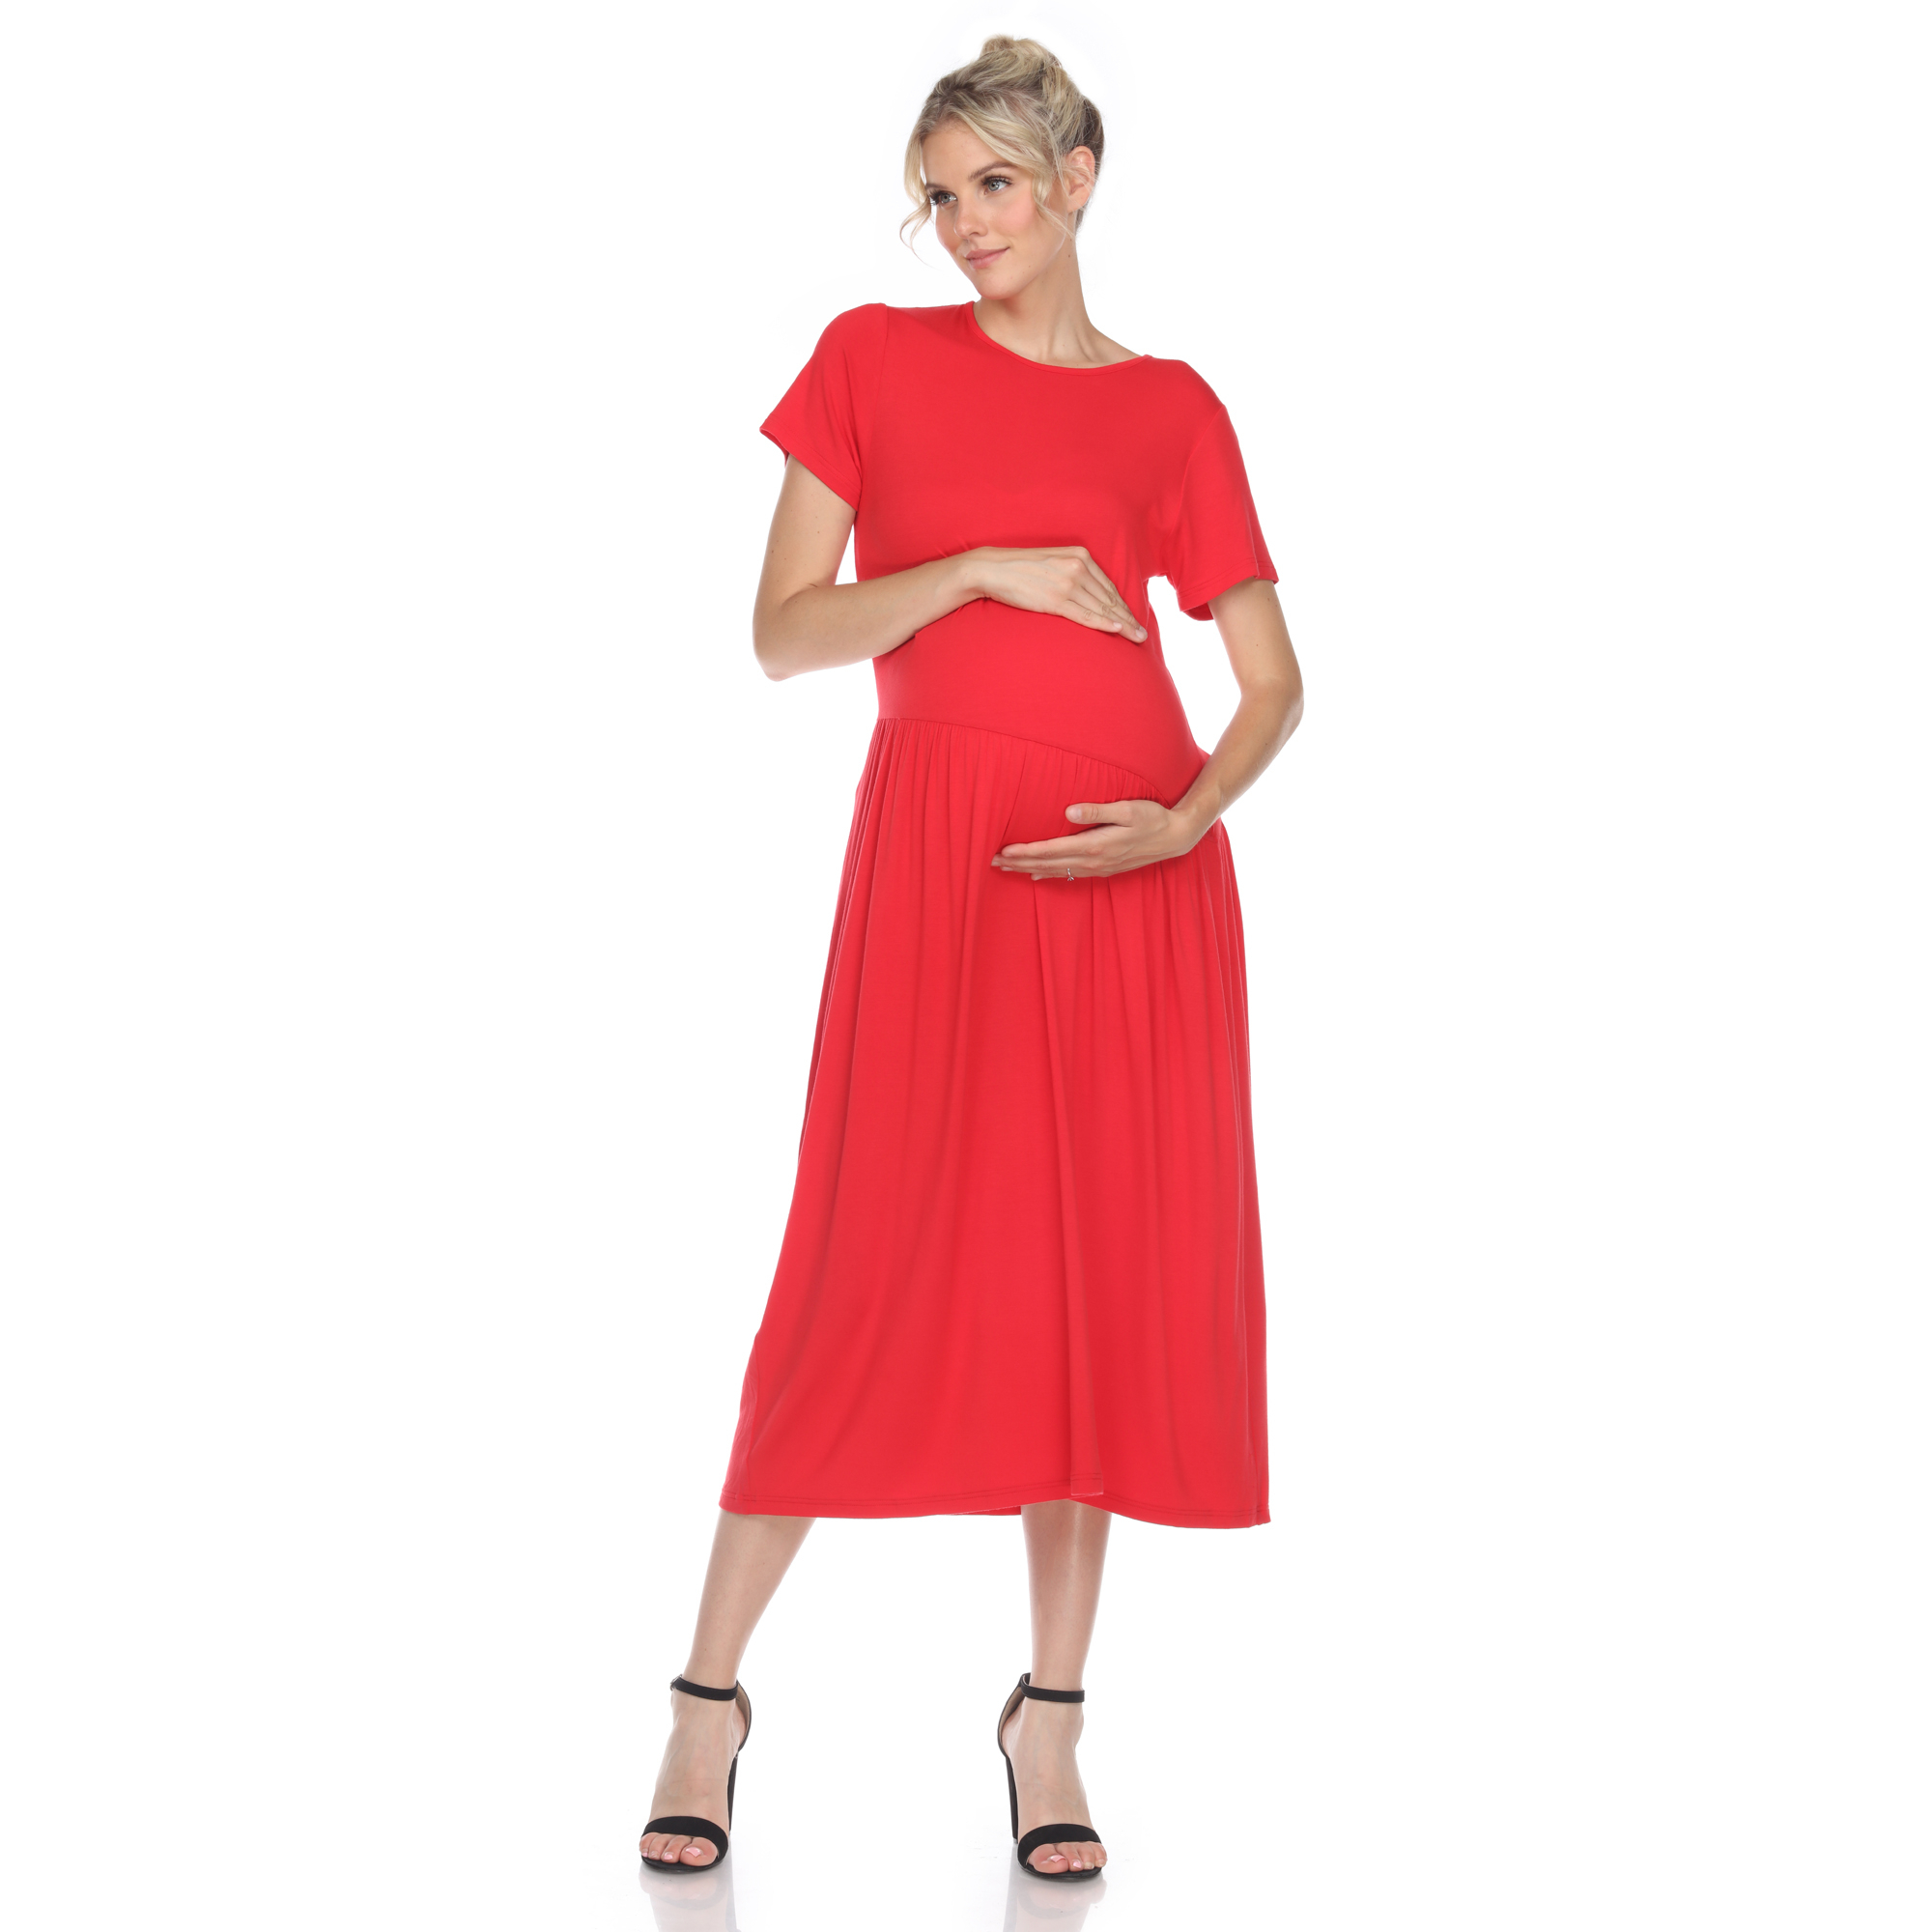 White Mark Womenâs Maternity Short Sleeve Maxi Dress - Red, Medium